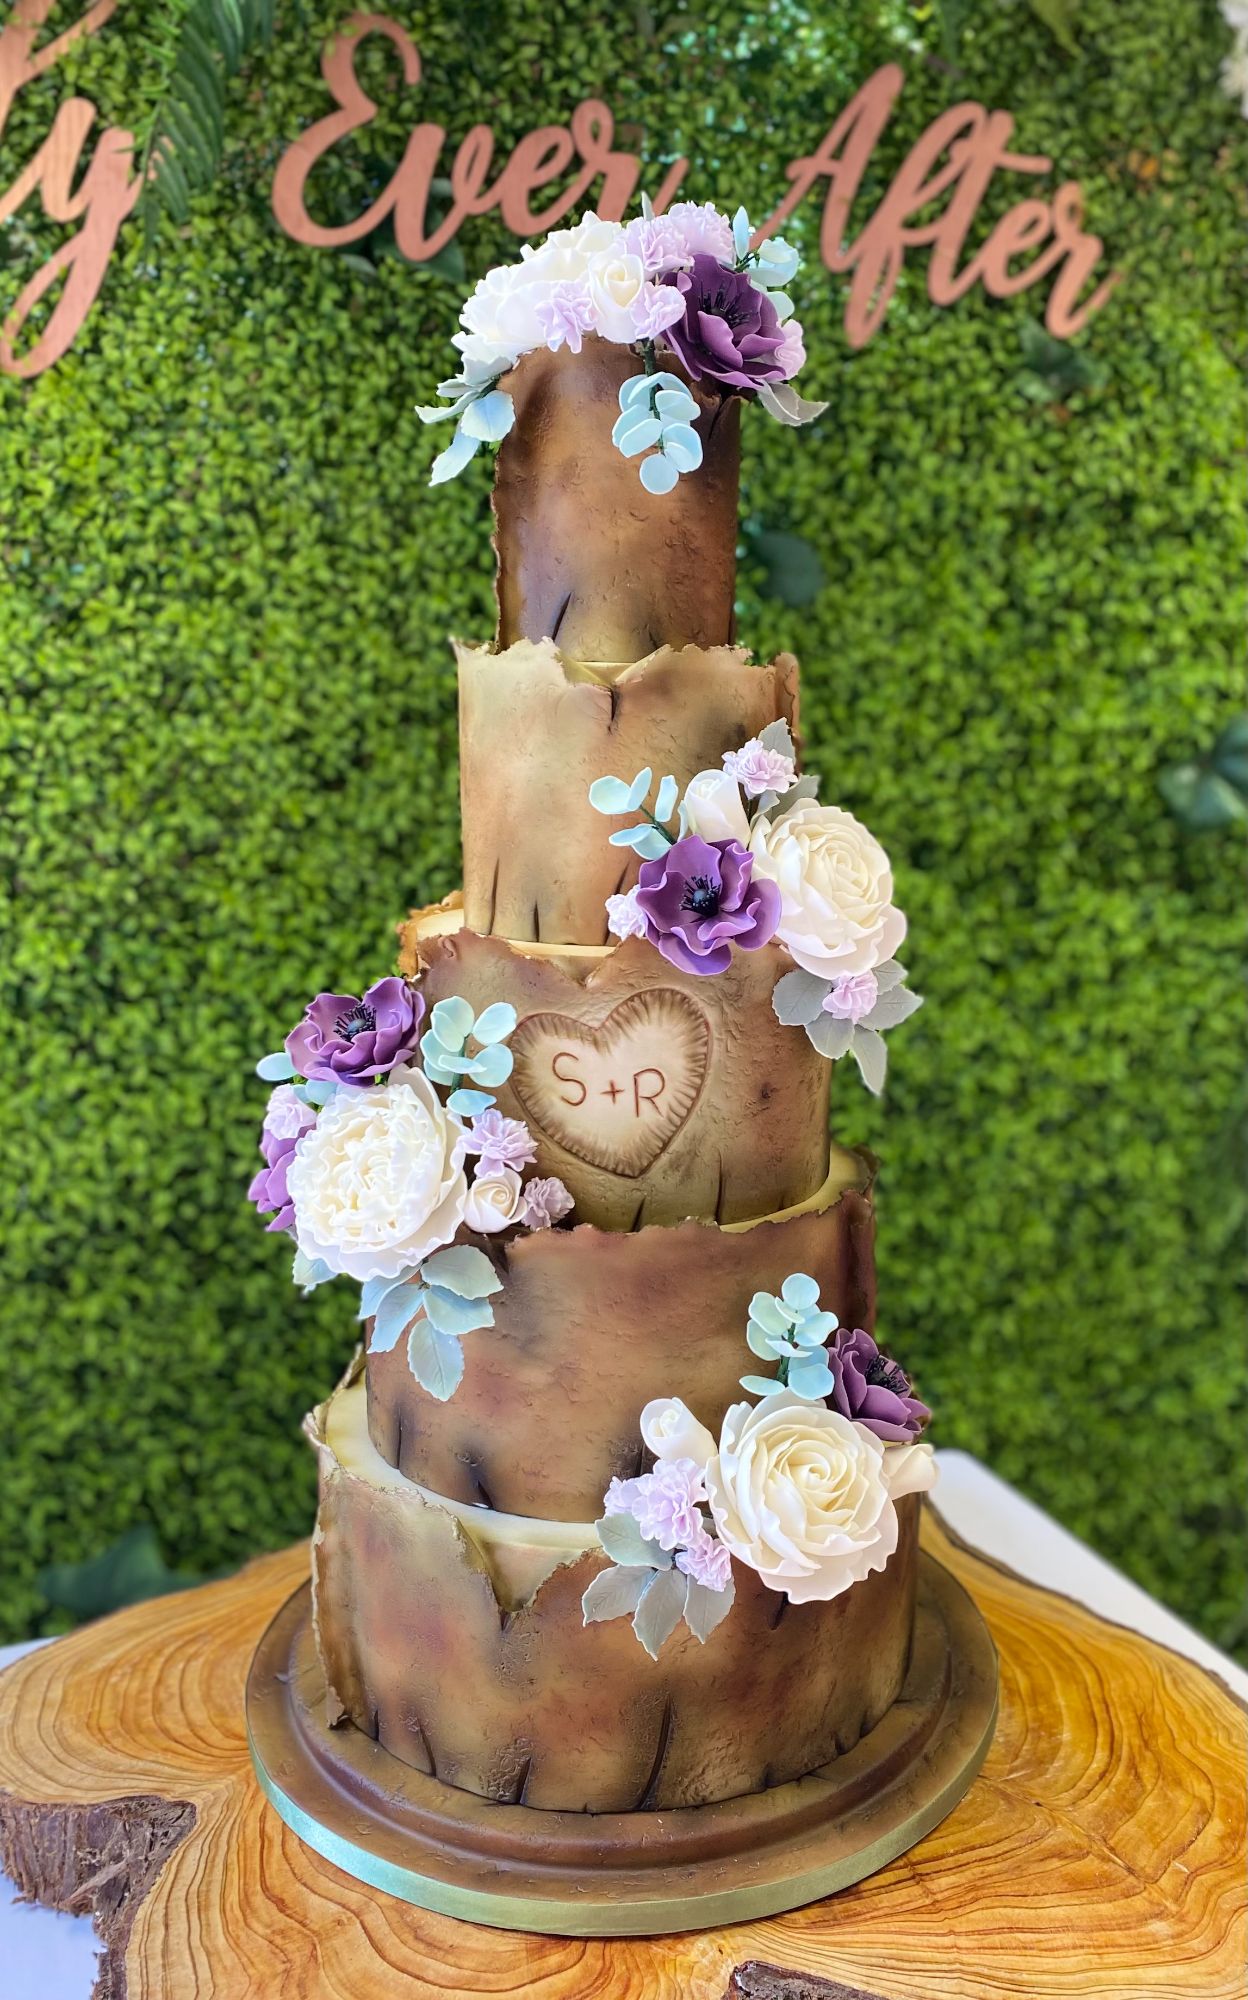 Helen Jane Cake Design, Christchurch, Dorset - wedding cakes (27)